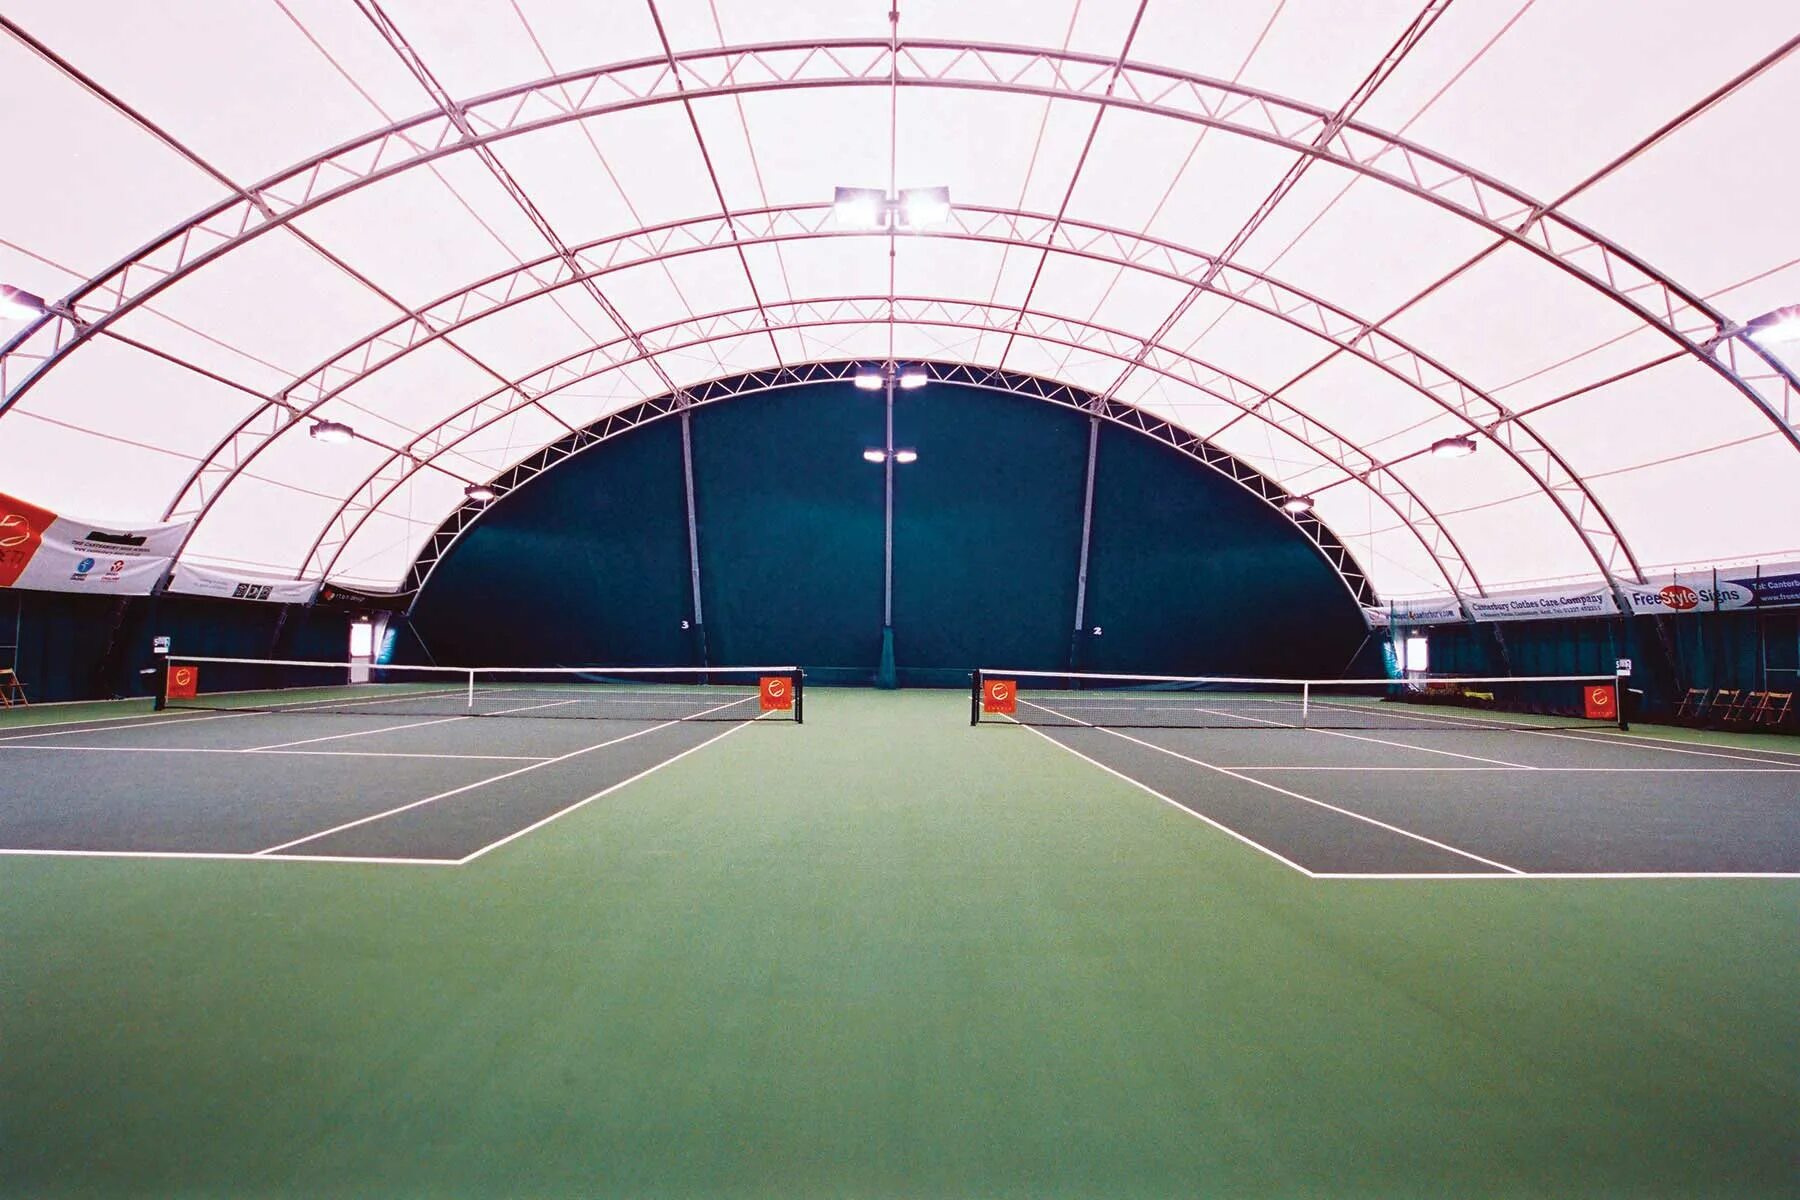 2 теннисных корта. Сад имени Баумана теннисный корт. Стадион Ангара легкоатлетический манеж. Теннисный корт 40 на 20. Теннисный корт Гамильтон.